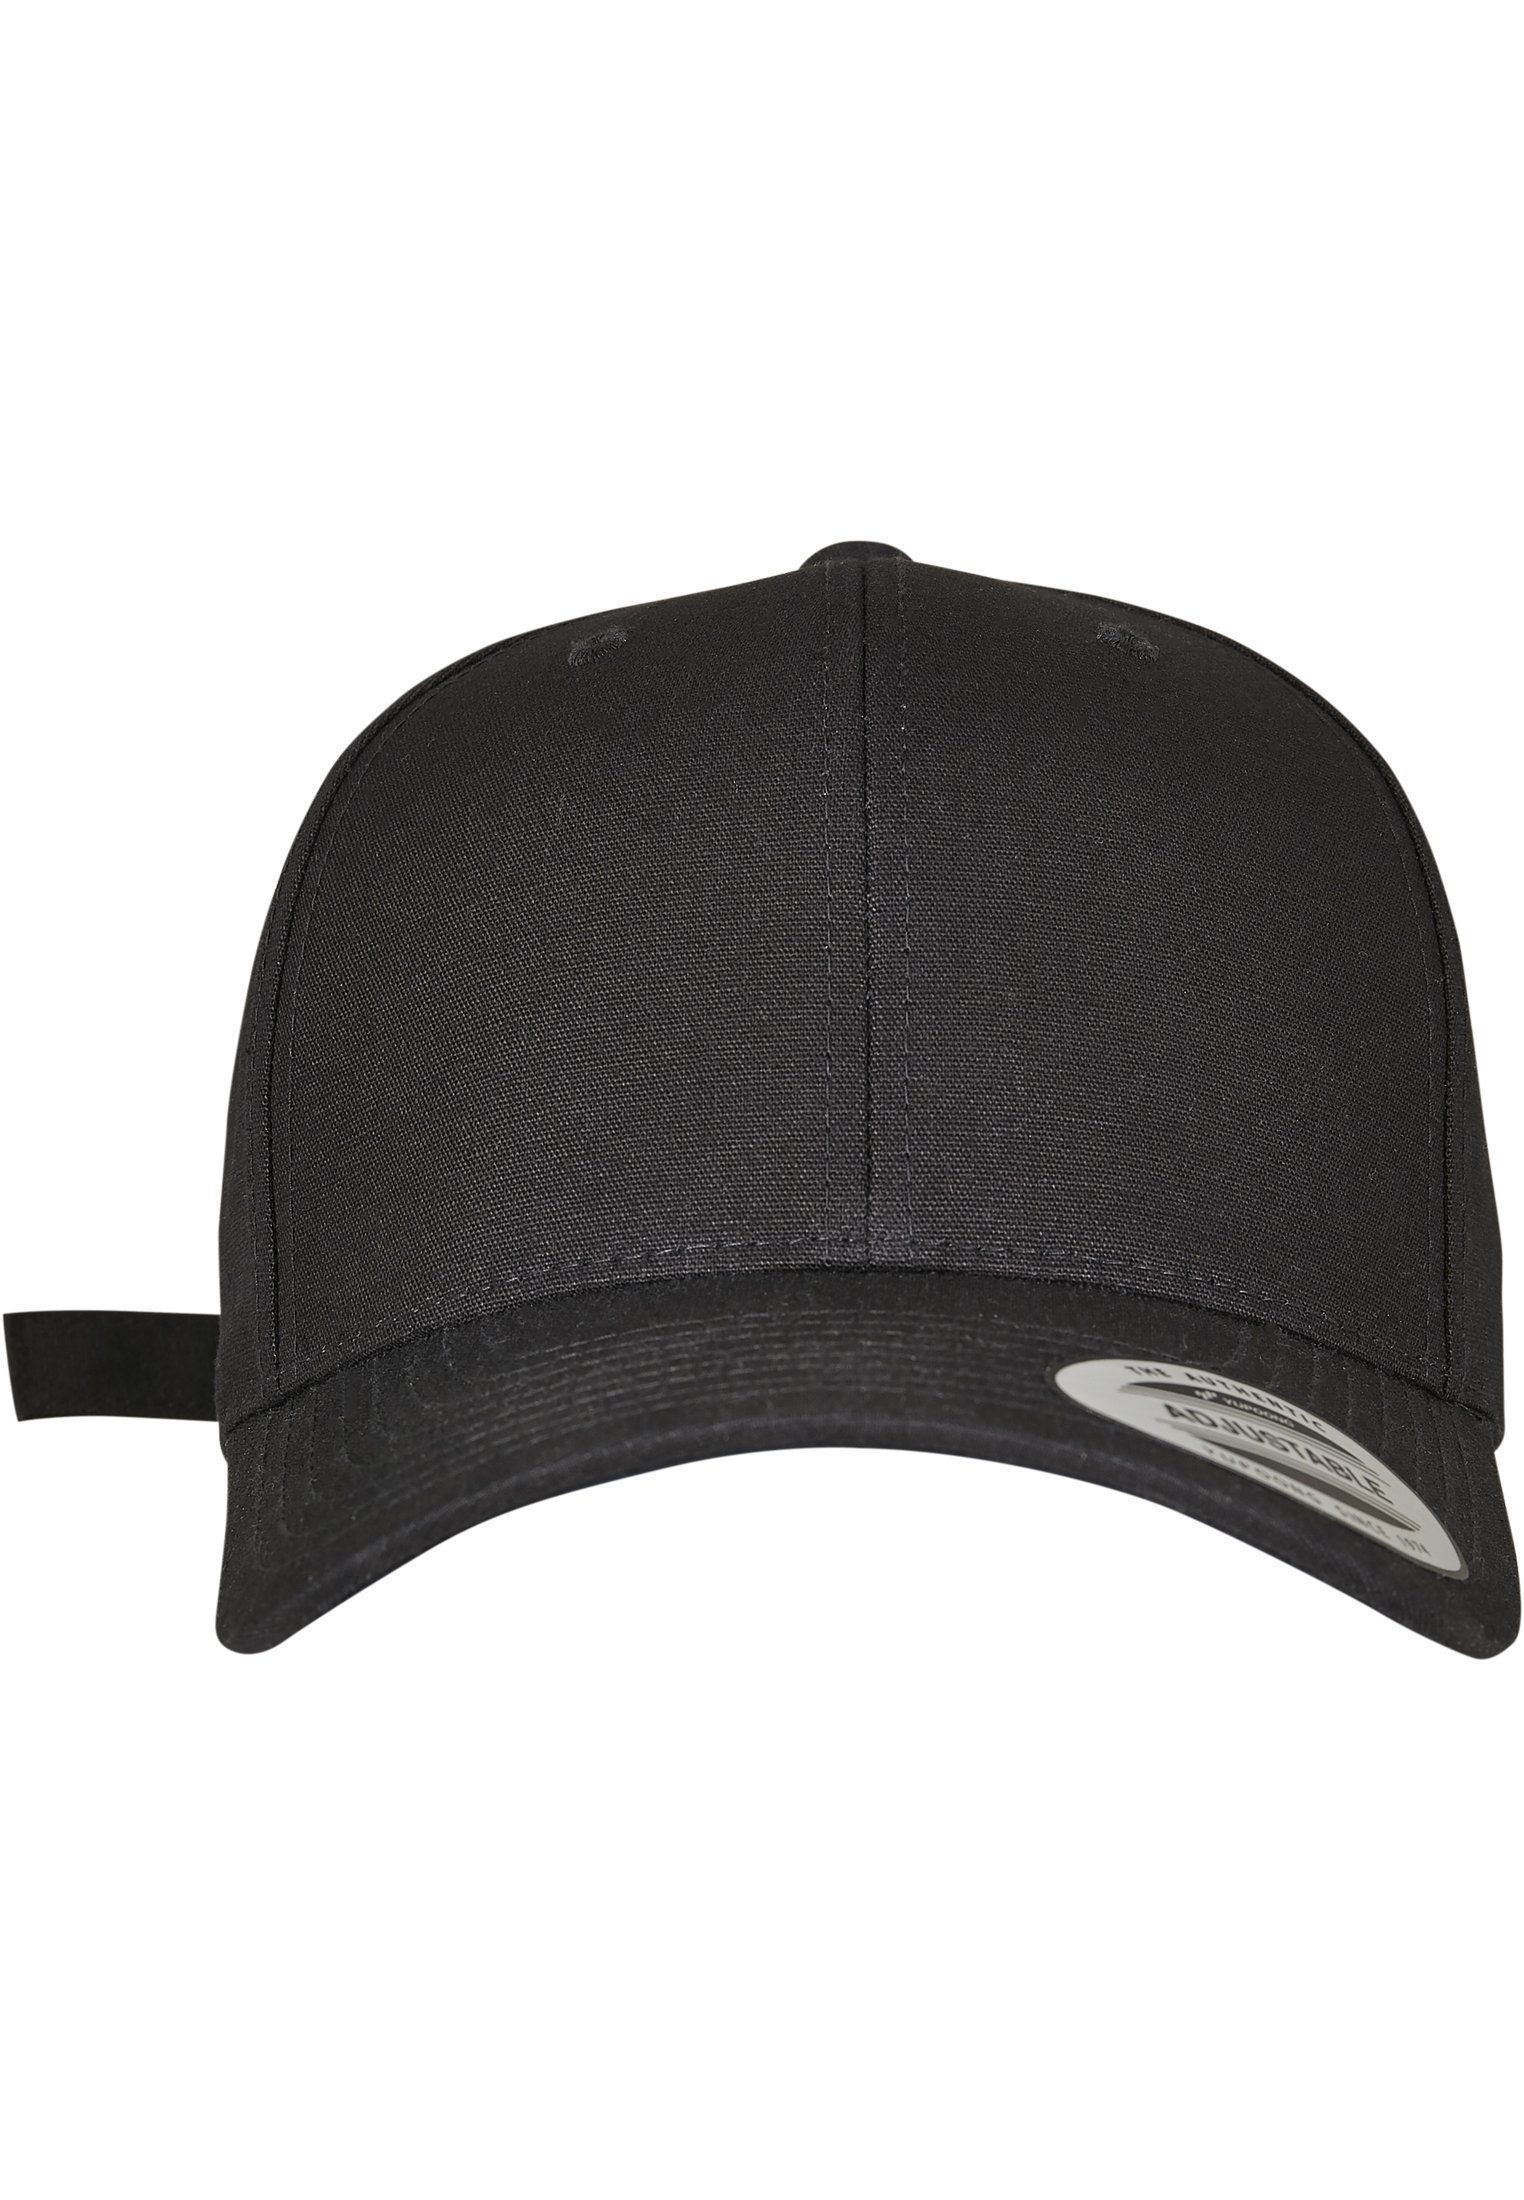 black Cap 6-Panel Metal Curved Snap Flex Snapback Flexfit